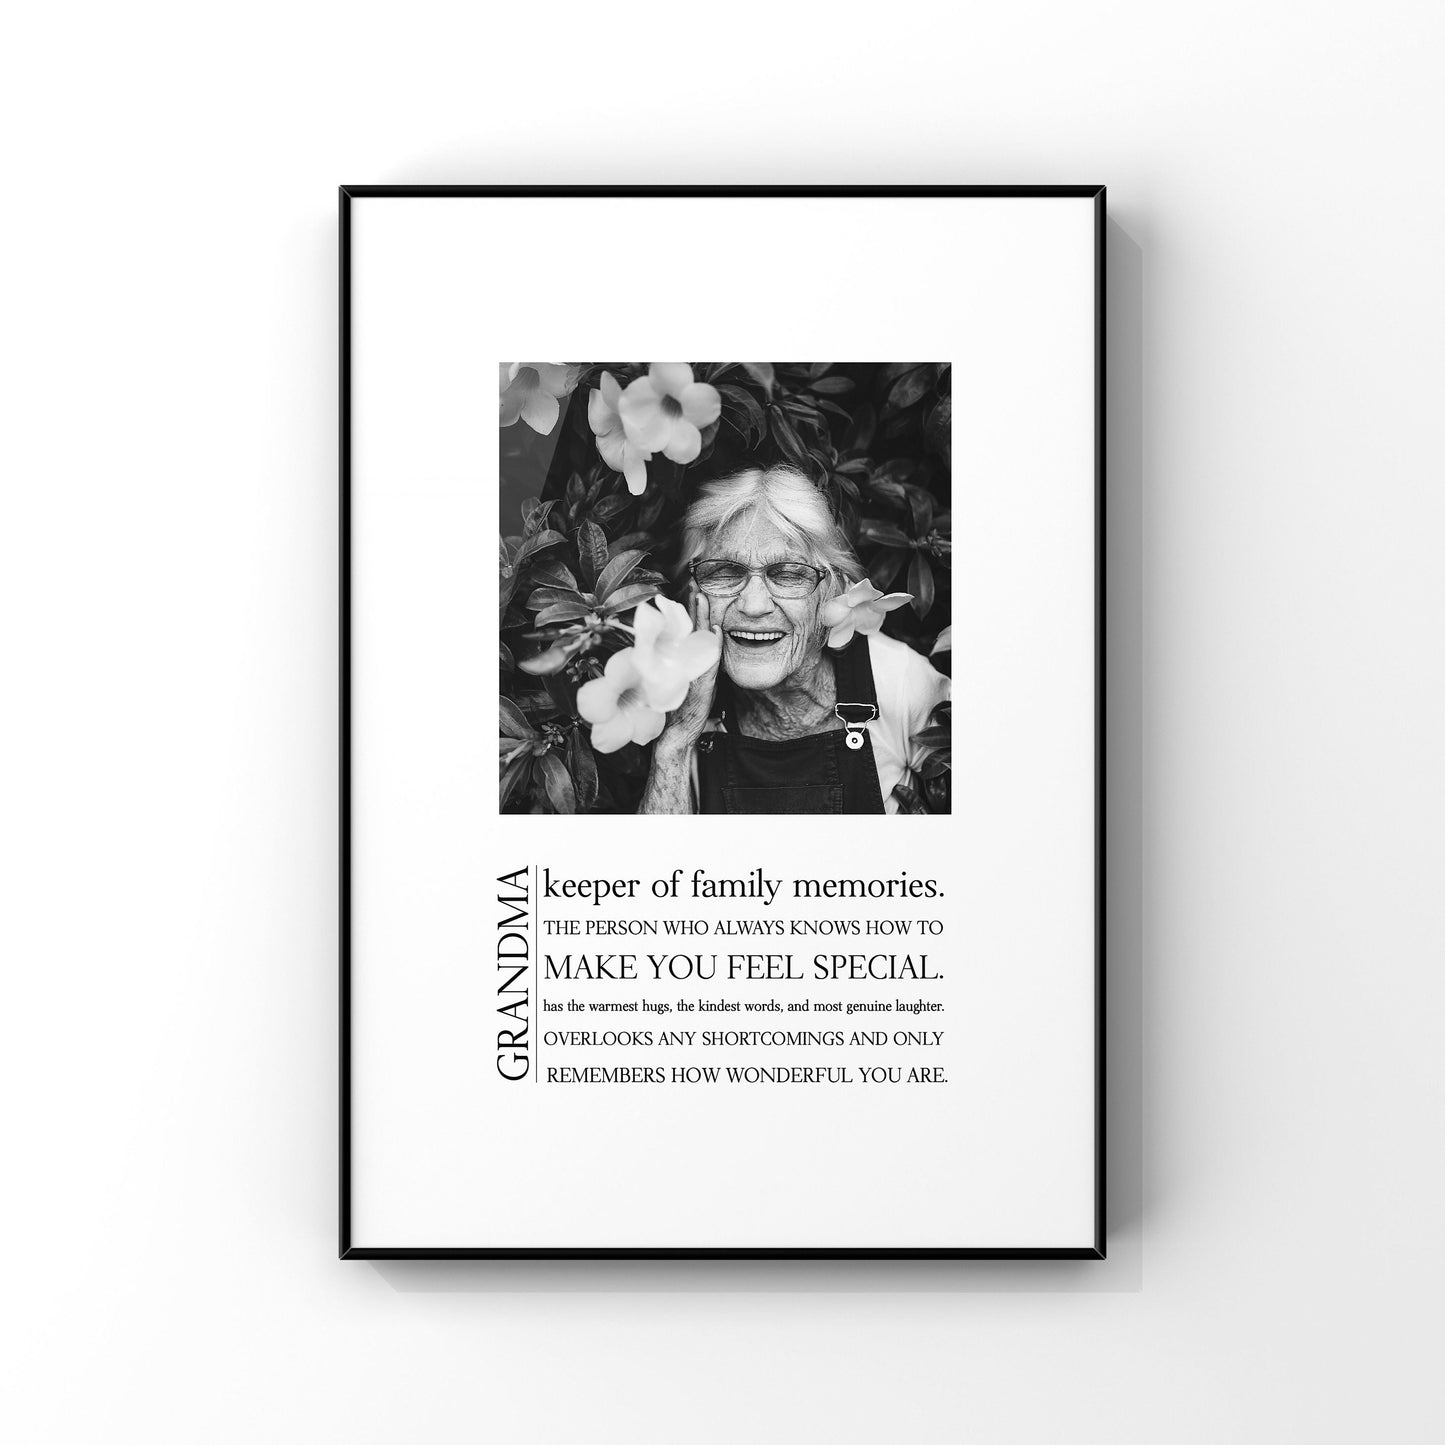 Custom Grandma definition,Personalized Grandma definition print,Definition print,Photo gift for Grandma,Grandmother gift,Mother’s Day gift